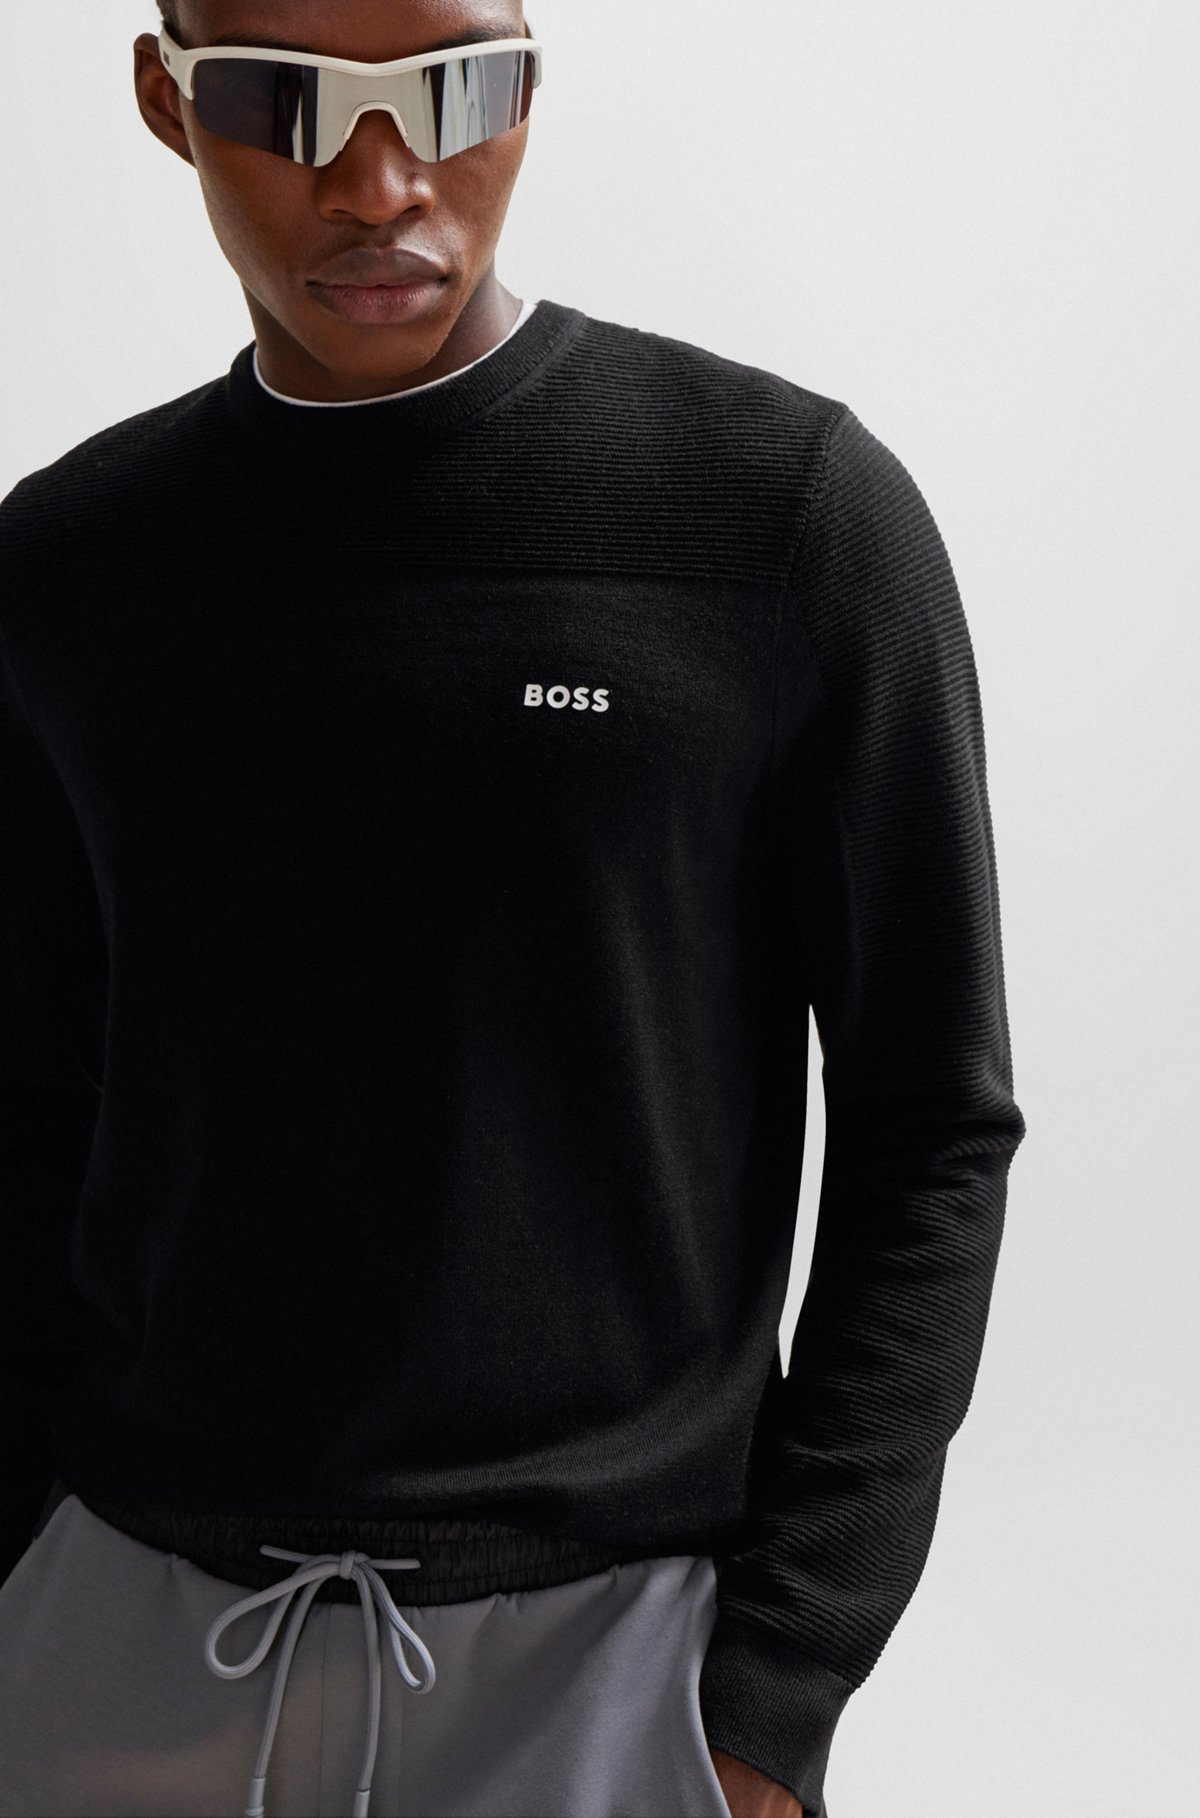 BOSS - Branded crew-neck sweater in dry-flex fabric